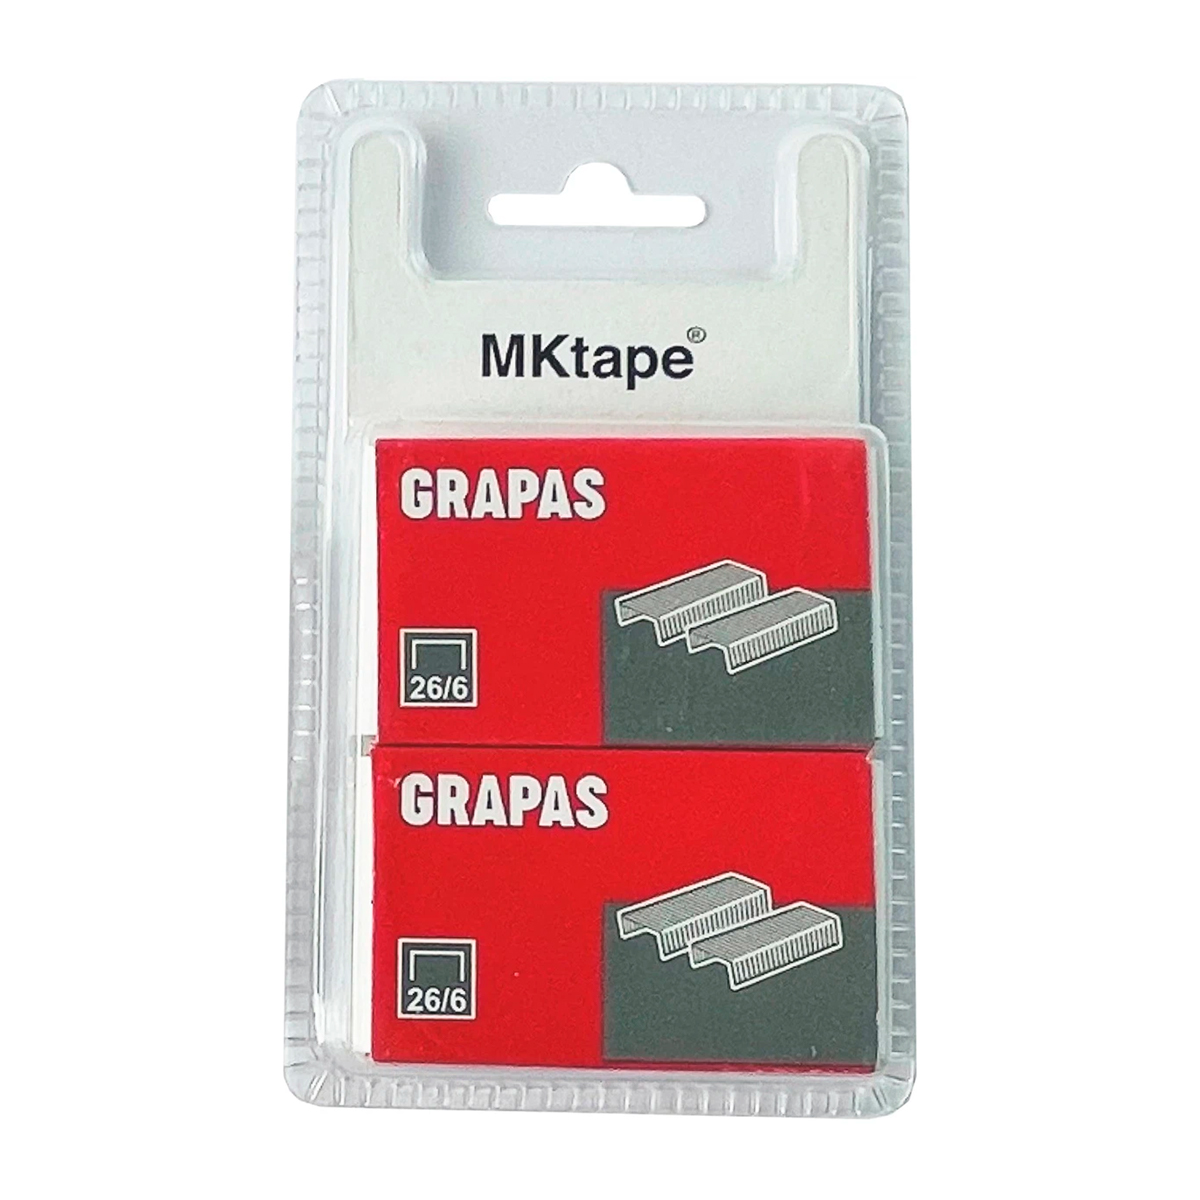 MKTAPE GRAPAS 26 06 GAL.2x500U